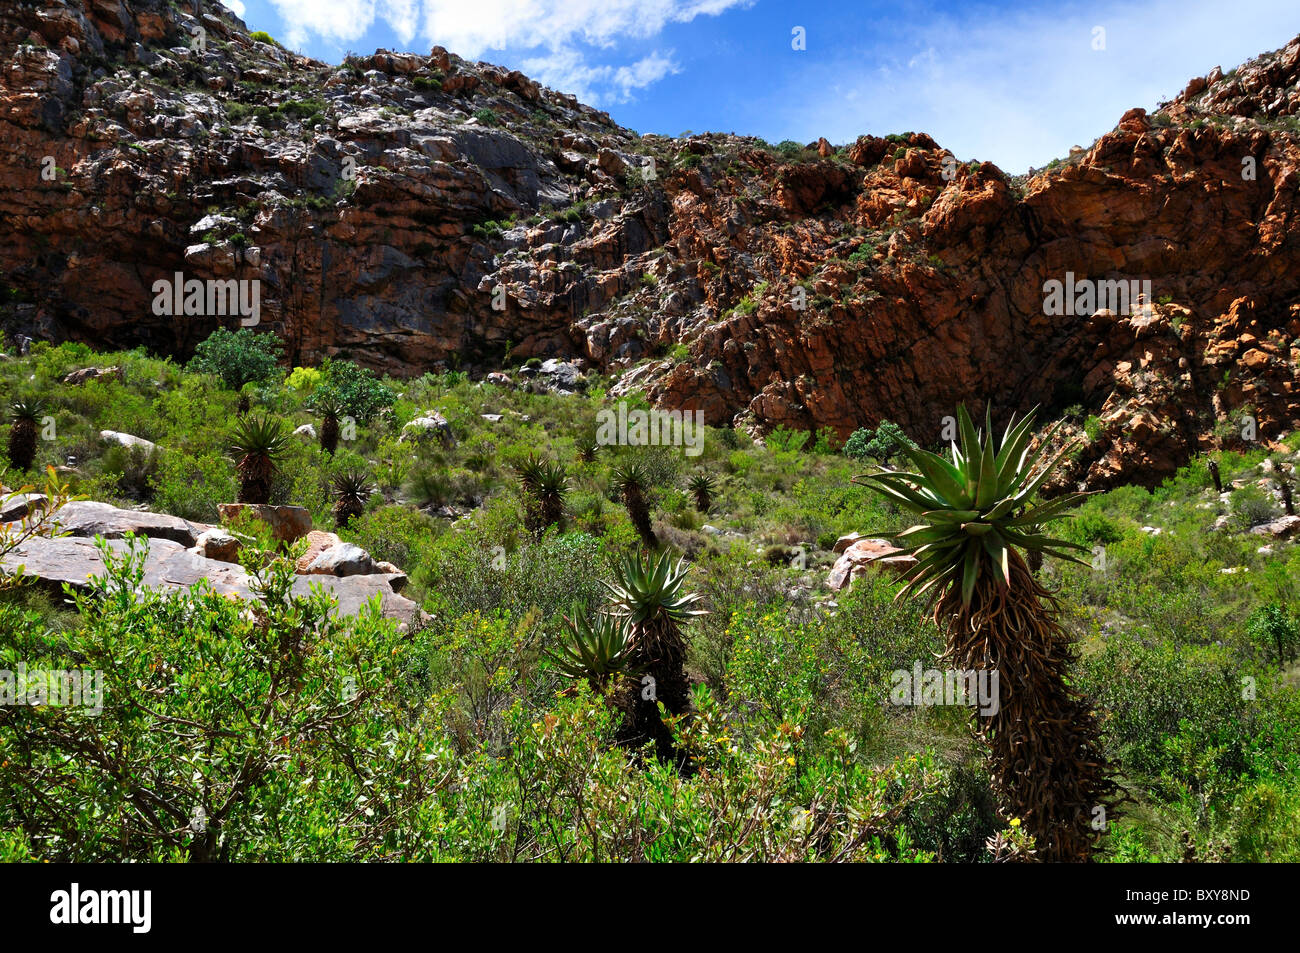 Lush green vegetations. South Africa. Stock Photo